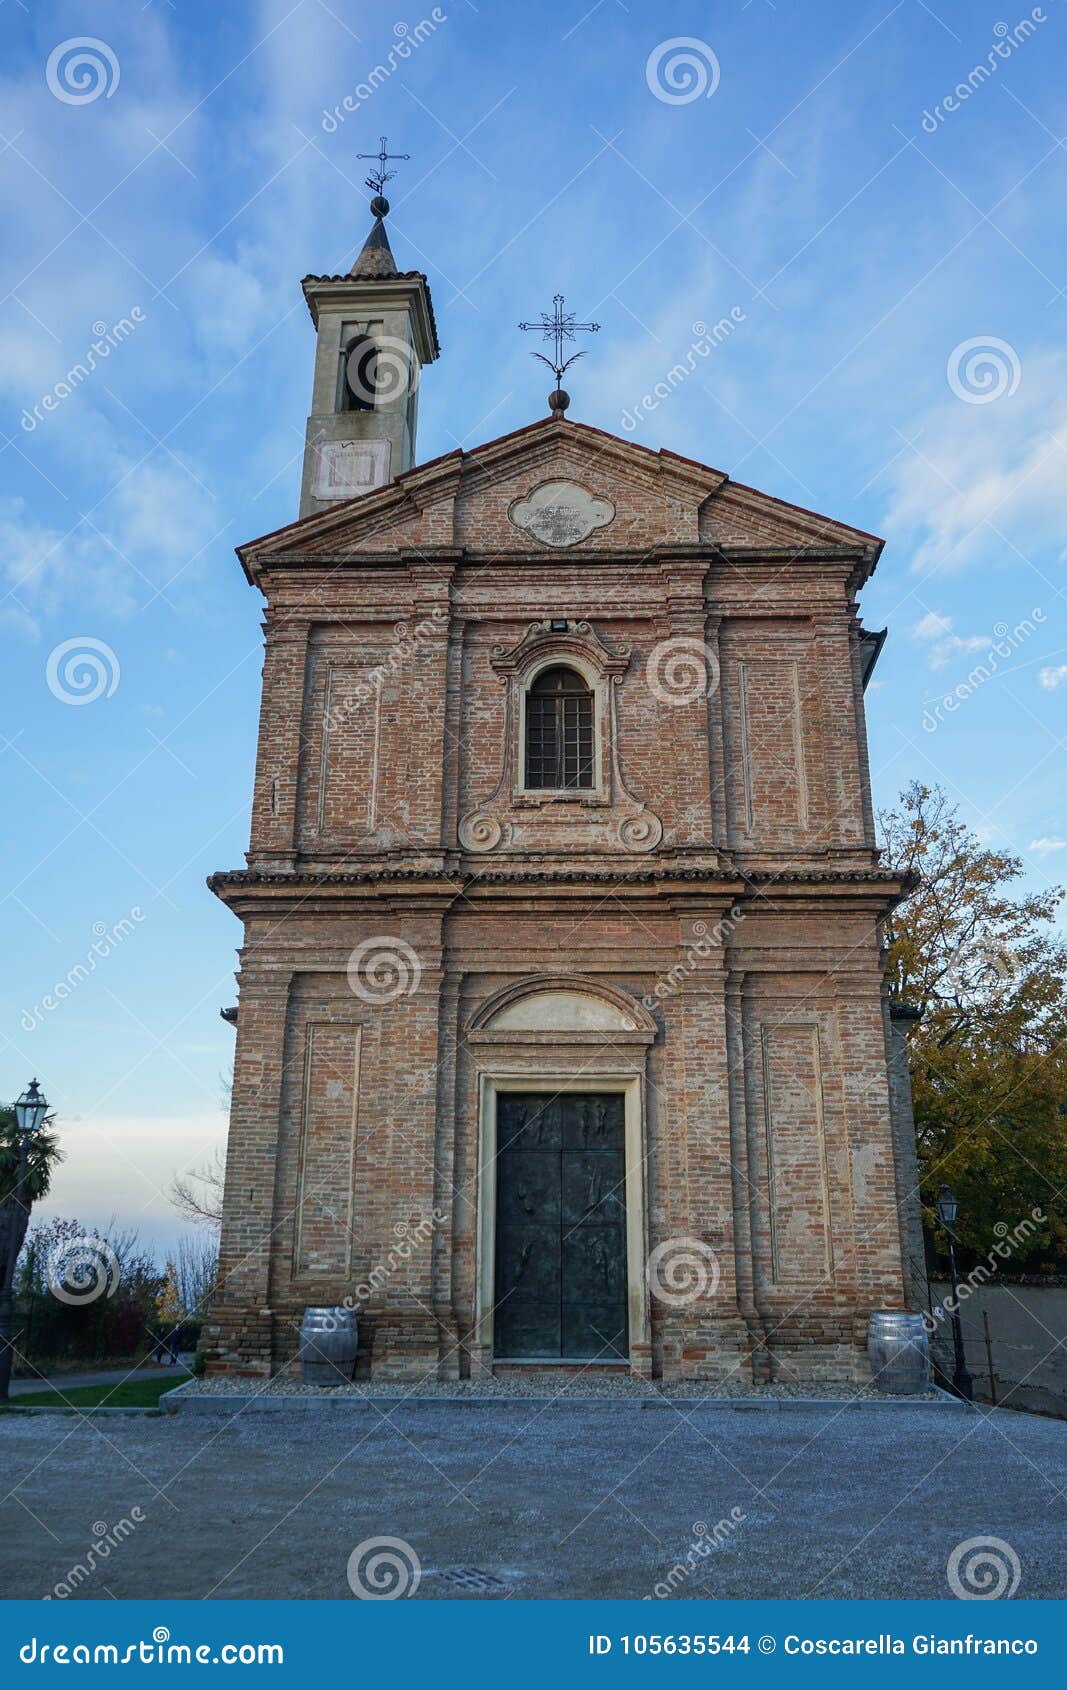 church of sant`agostino in monforte d`alba, piedmont - italy